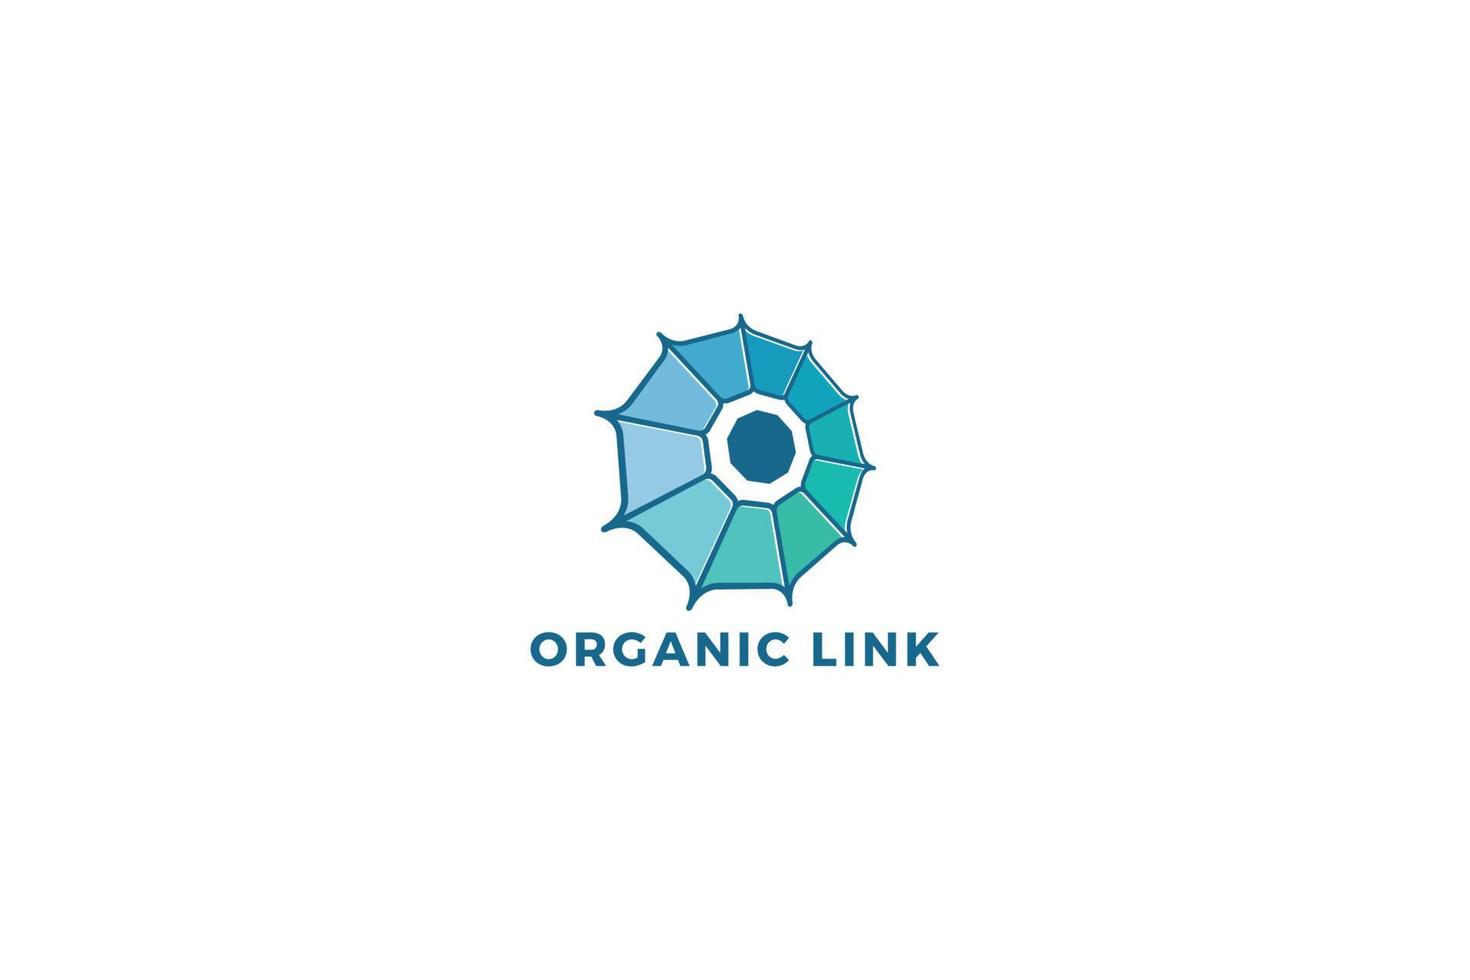 Letter o organic link business logo design vector